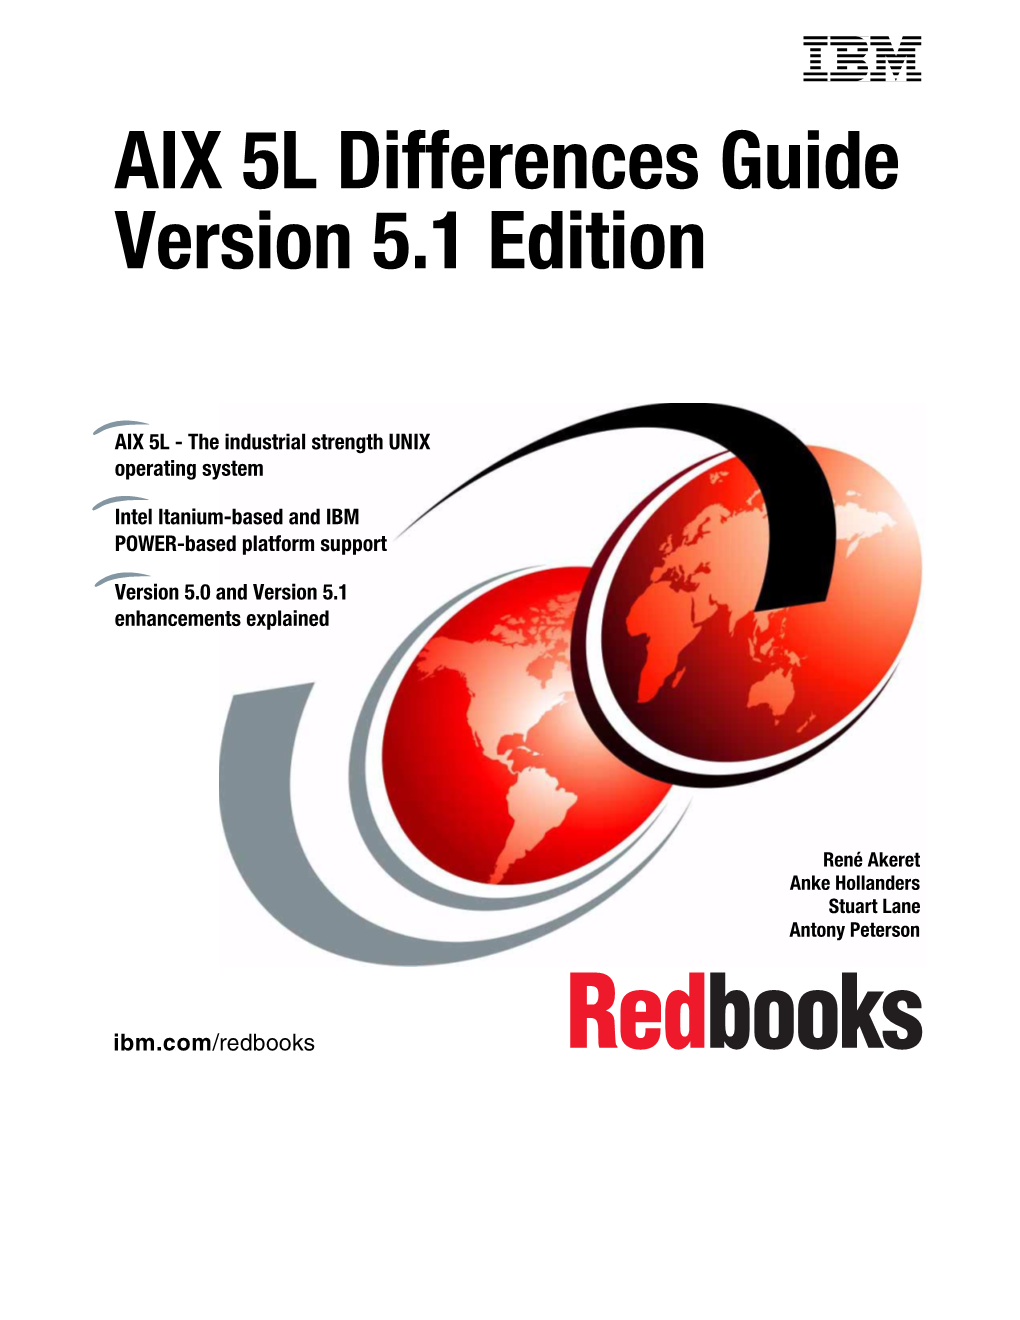 AIX 5L Differences Guide Version 5.1 Edition